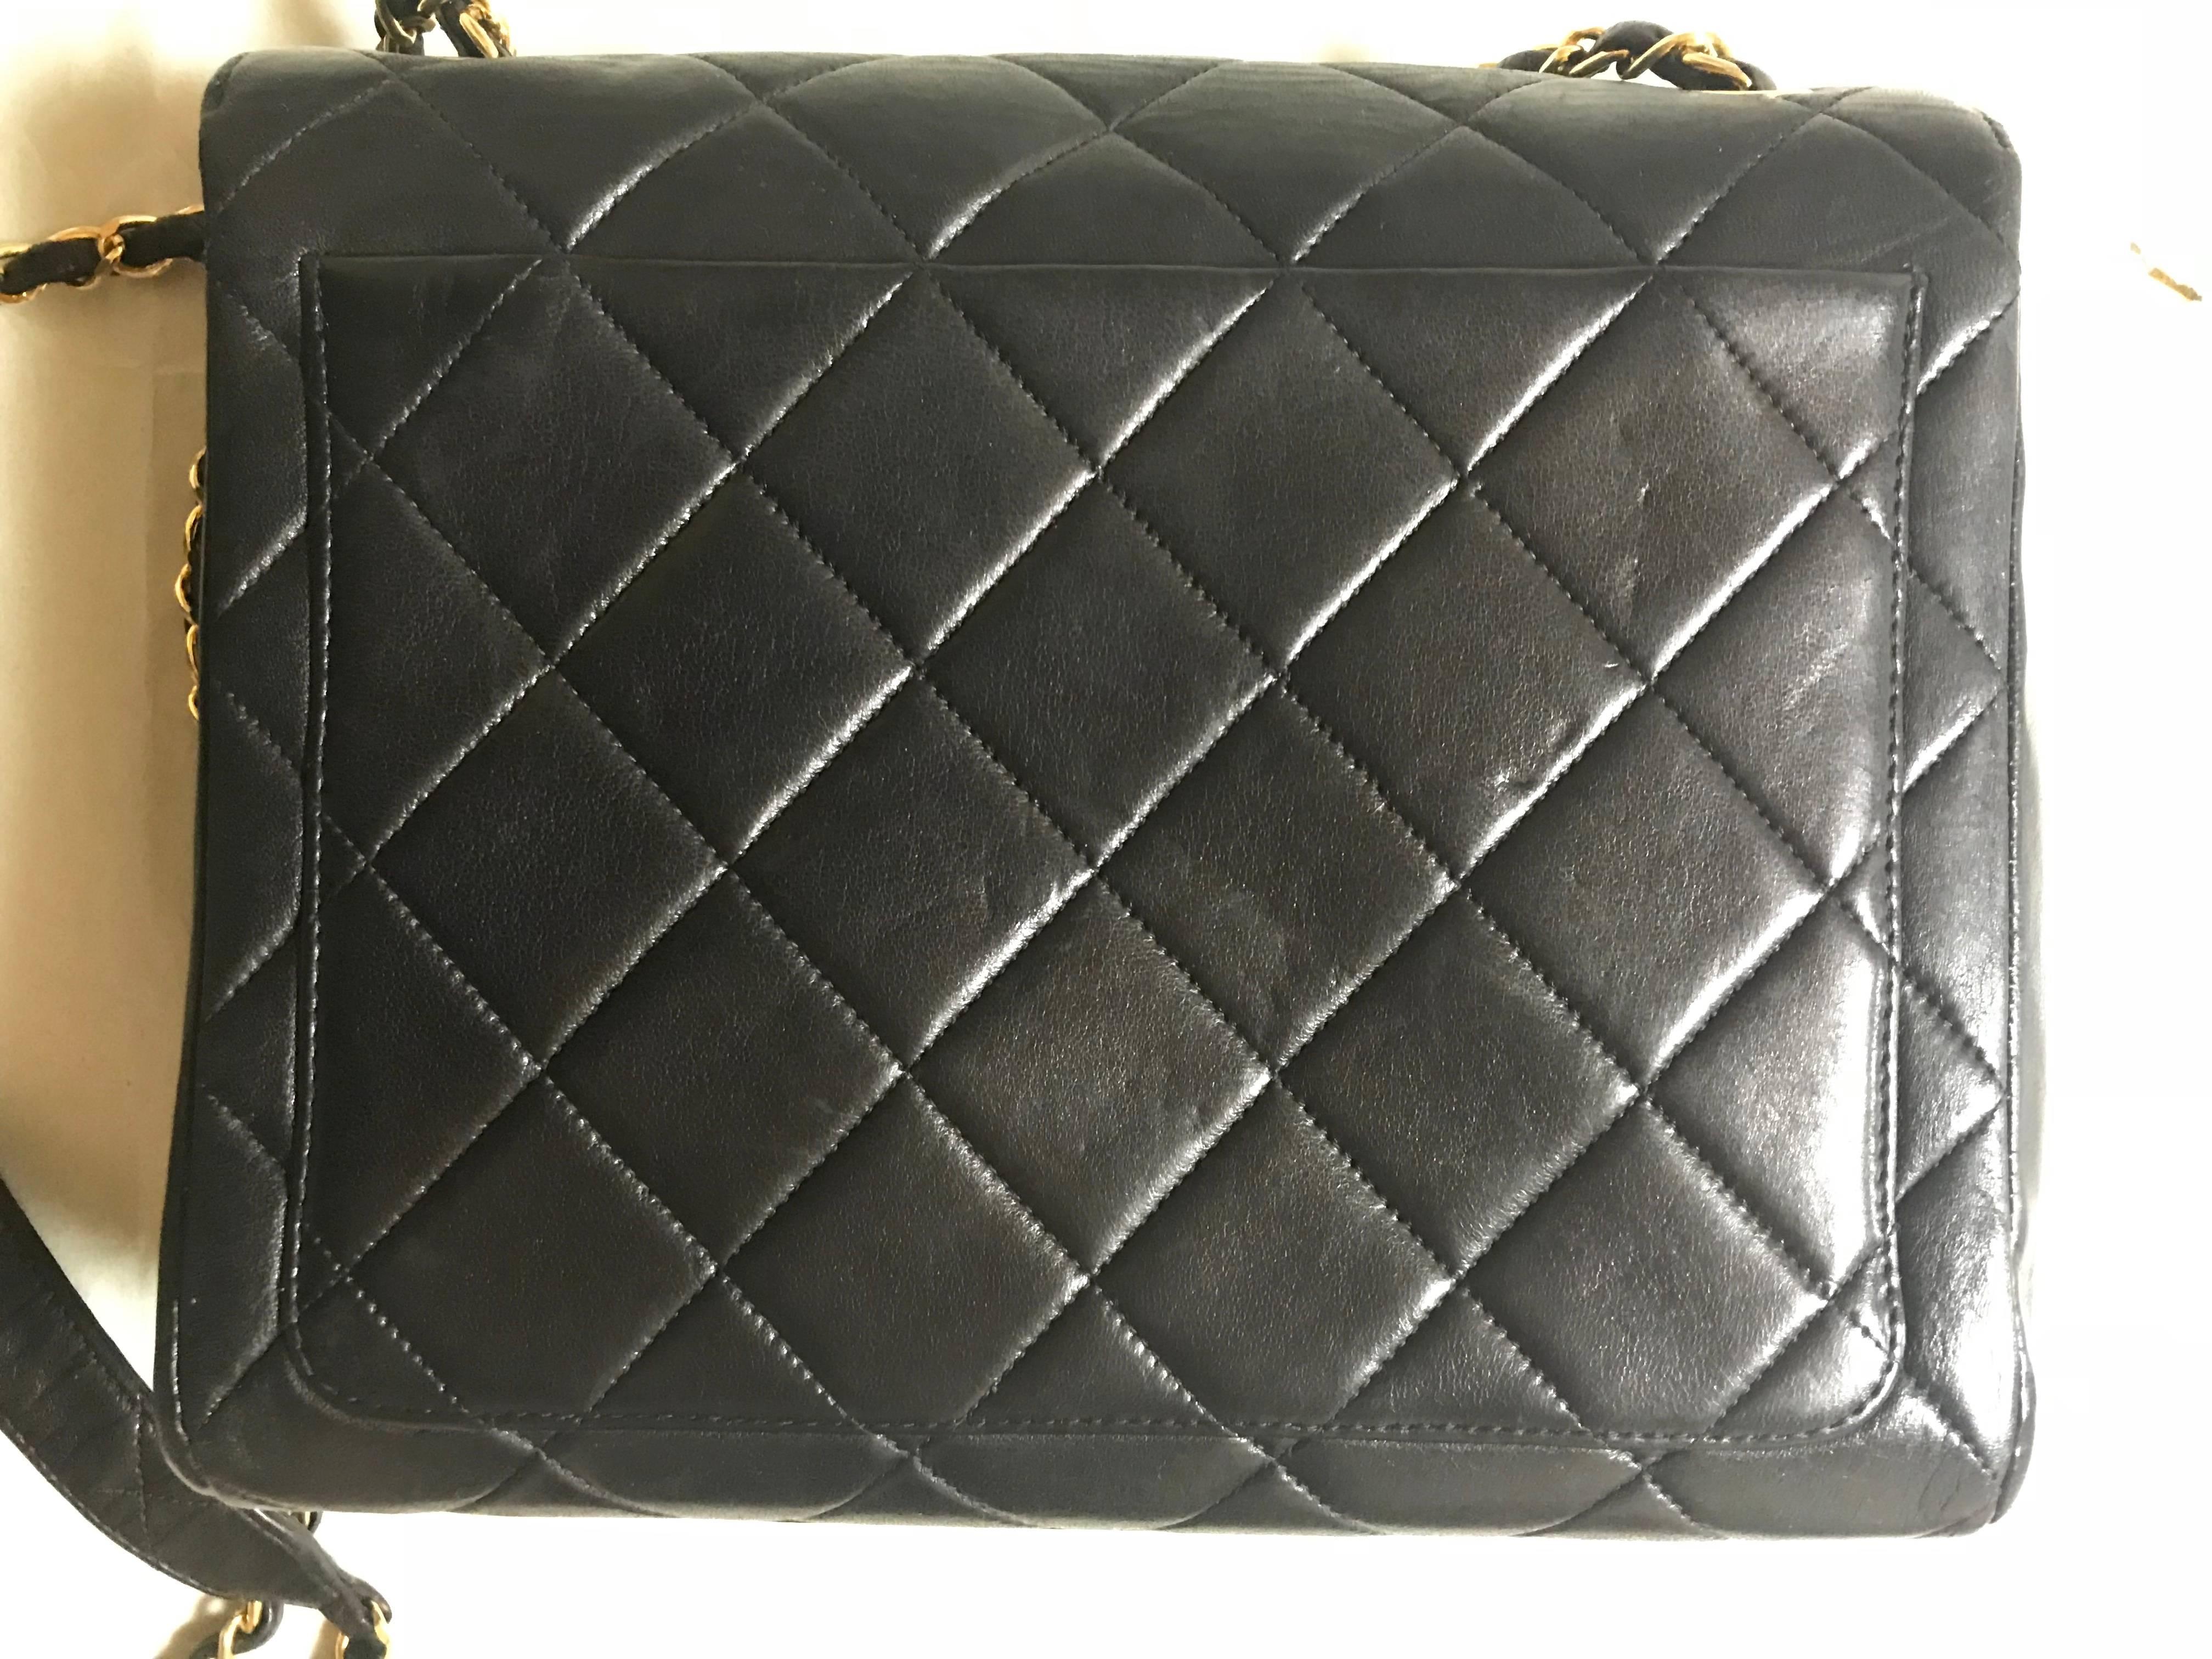 Vintage CHANEL black lamb leather 2.55 classic square shape shoulder bag with cc 6